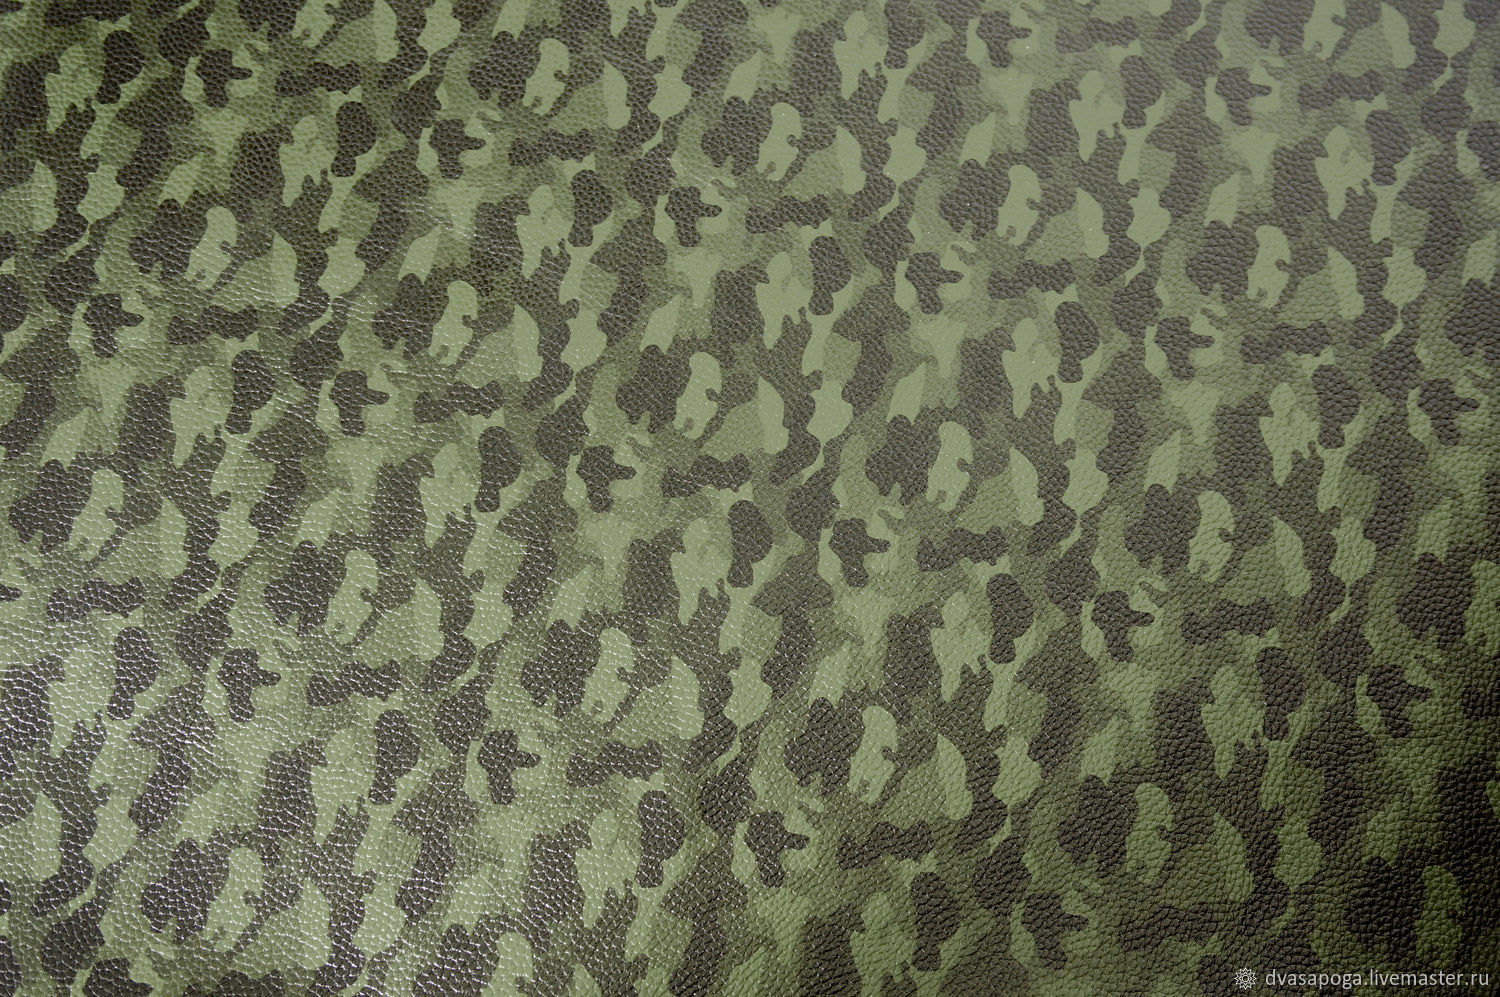 Материал хаки. Цвет хаки 806b2a. Ткань хаки армейский (RAL-7008). Хаки армейский (RAL-7008). Камуфляжный цвет.